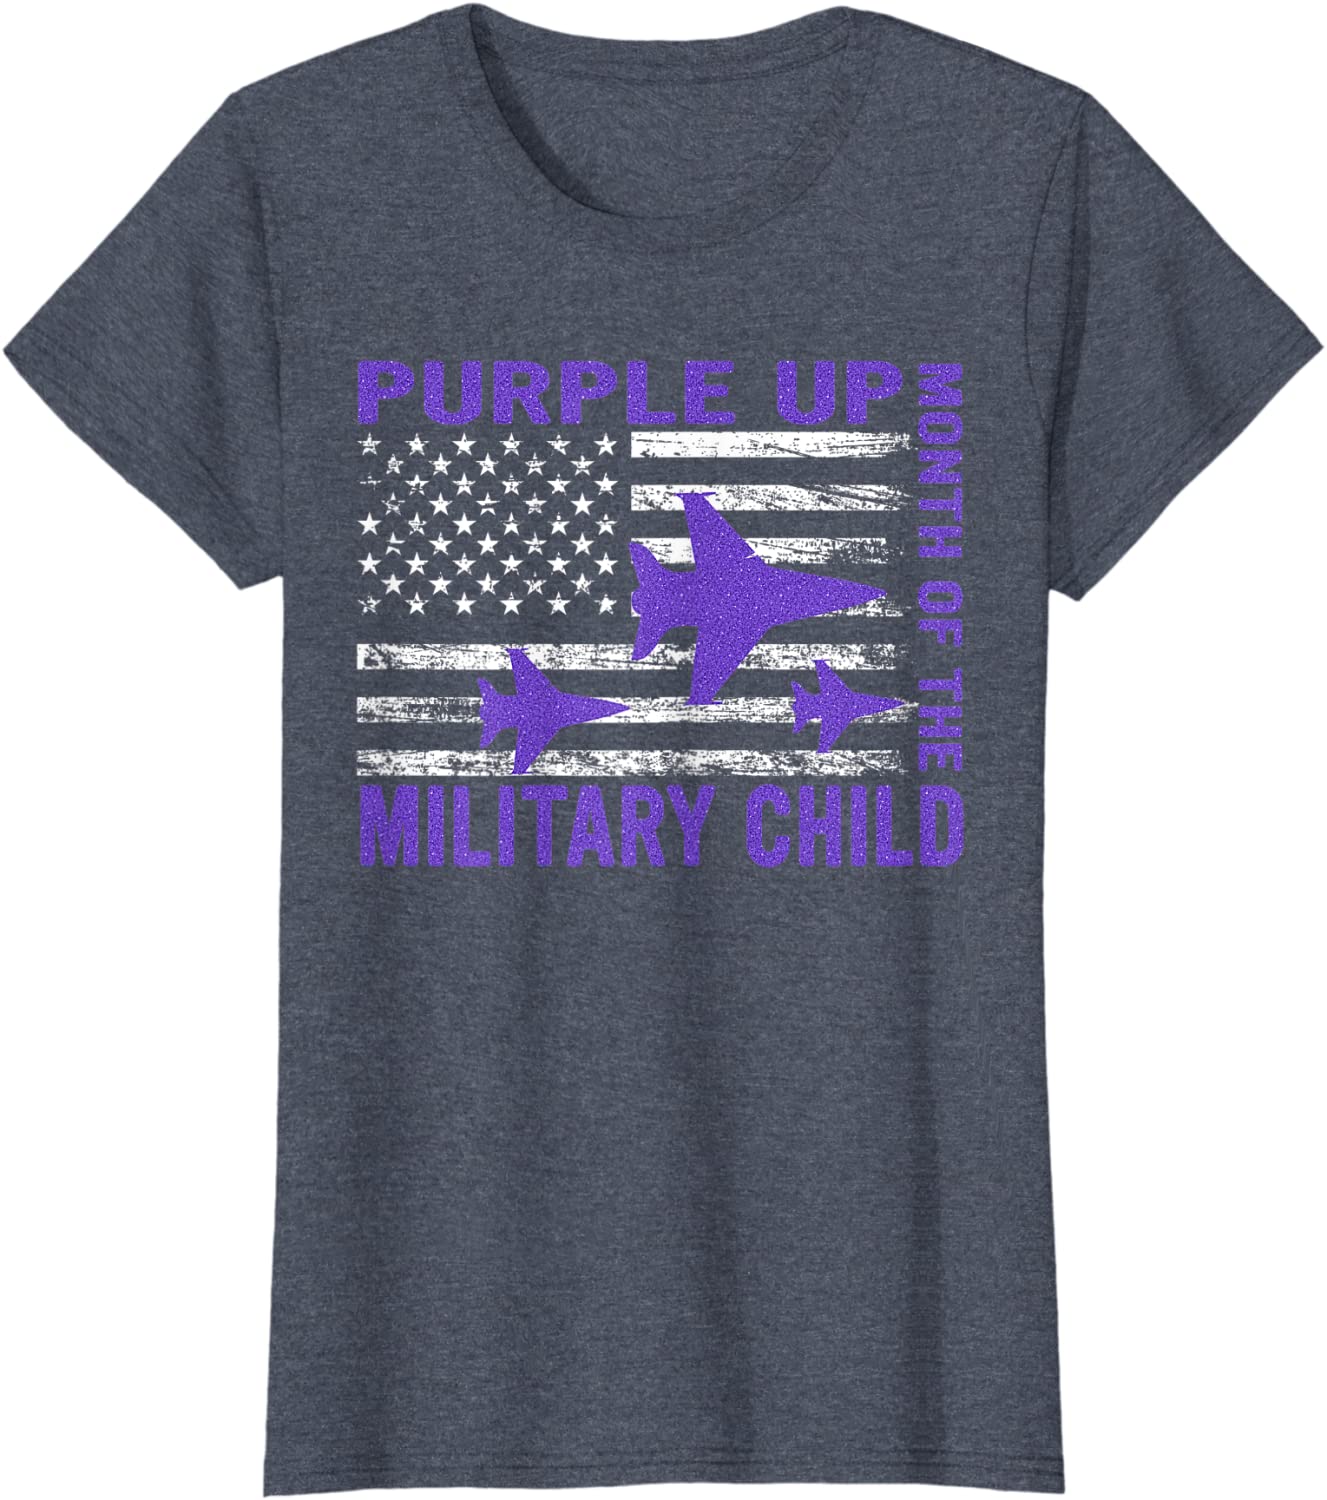 Purple Up Military Child Month USA Flag T-Shirt